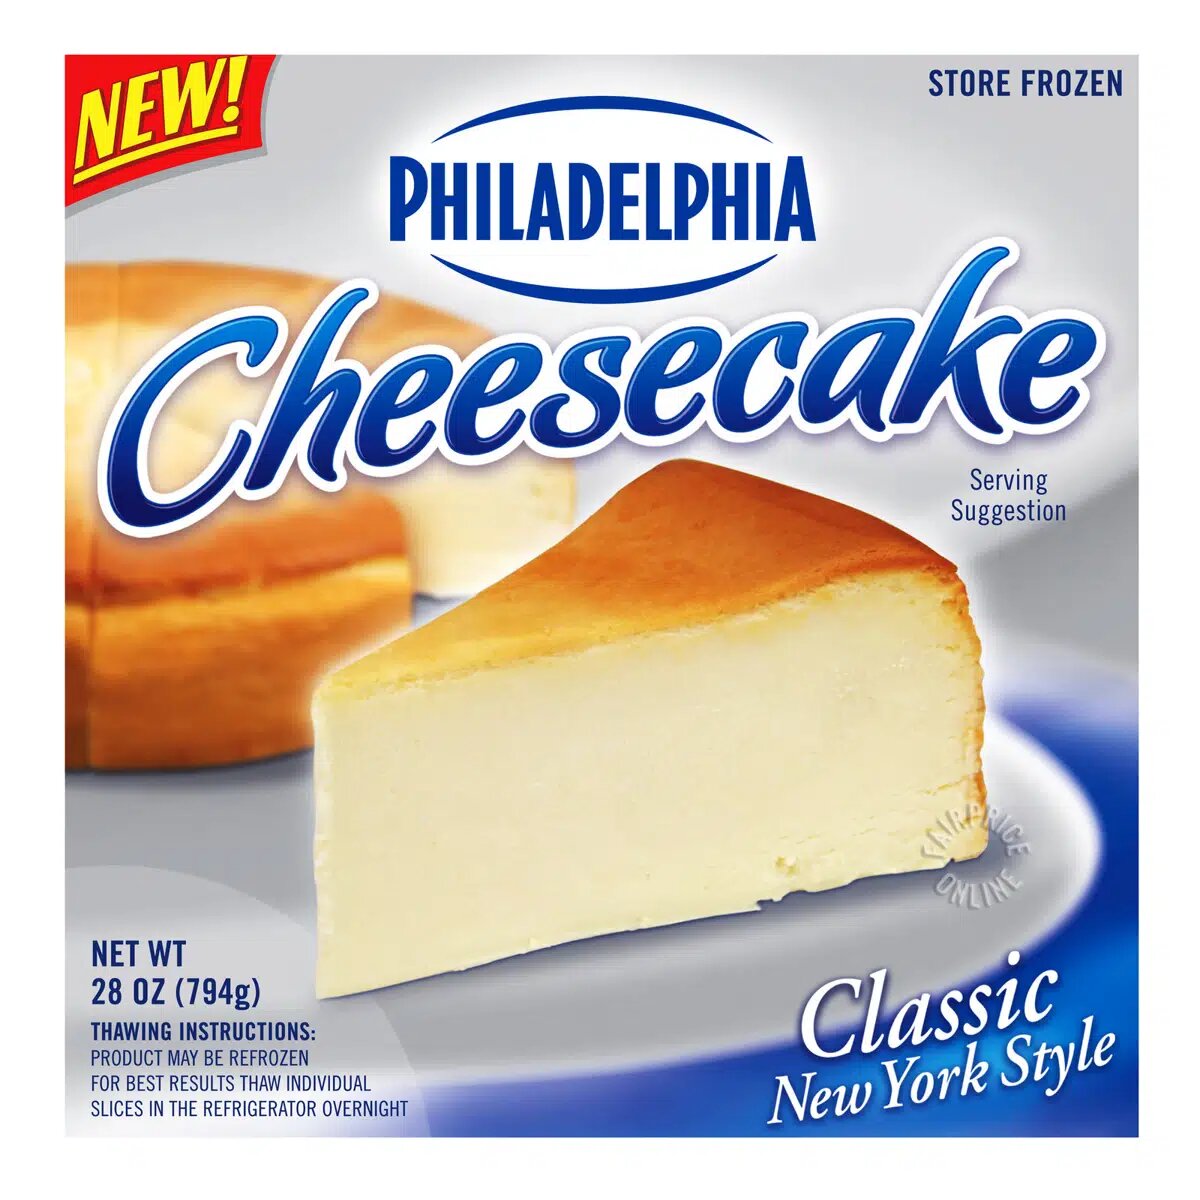 Philadelphia Classic Cheesecake - New York Style